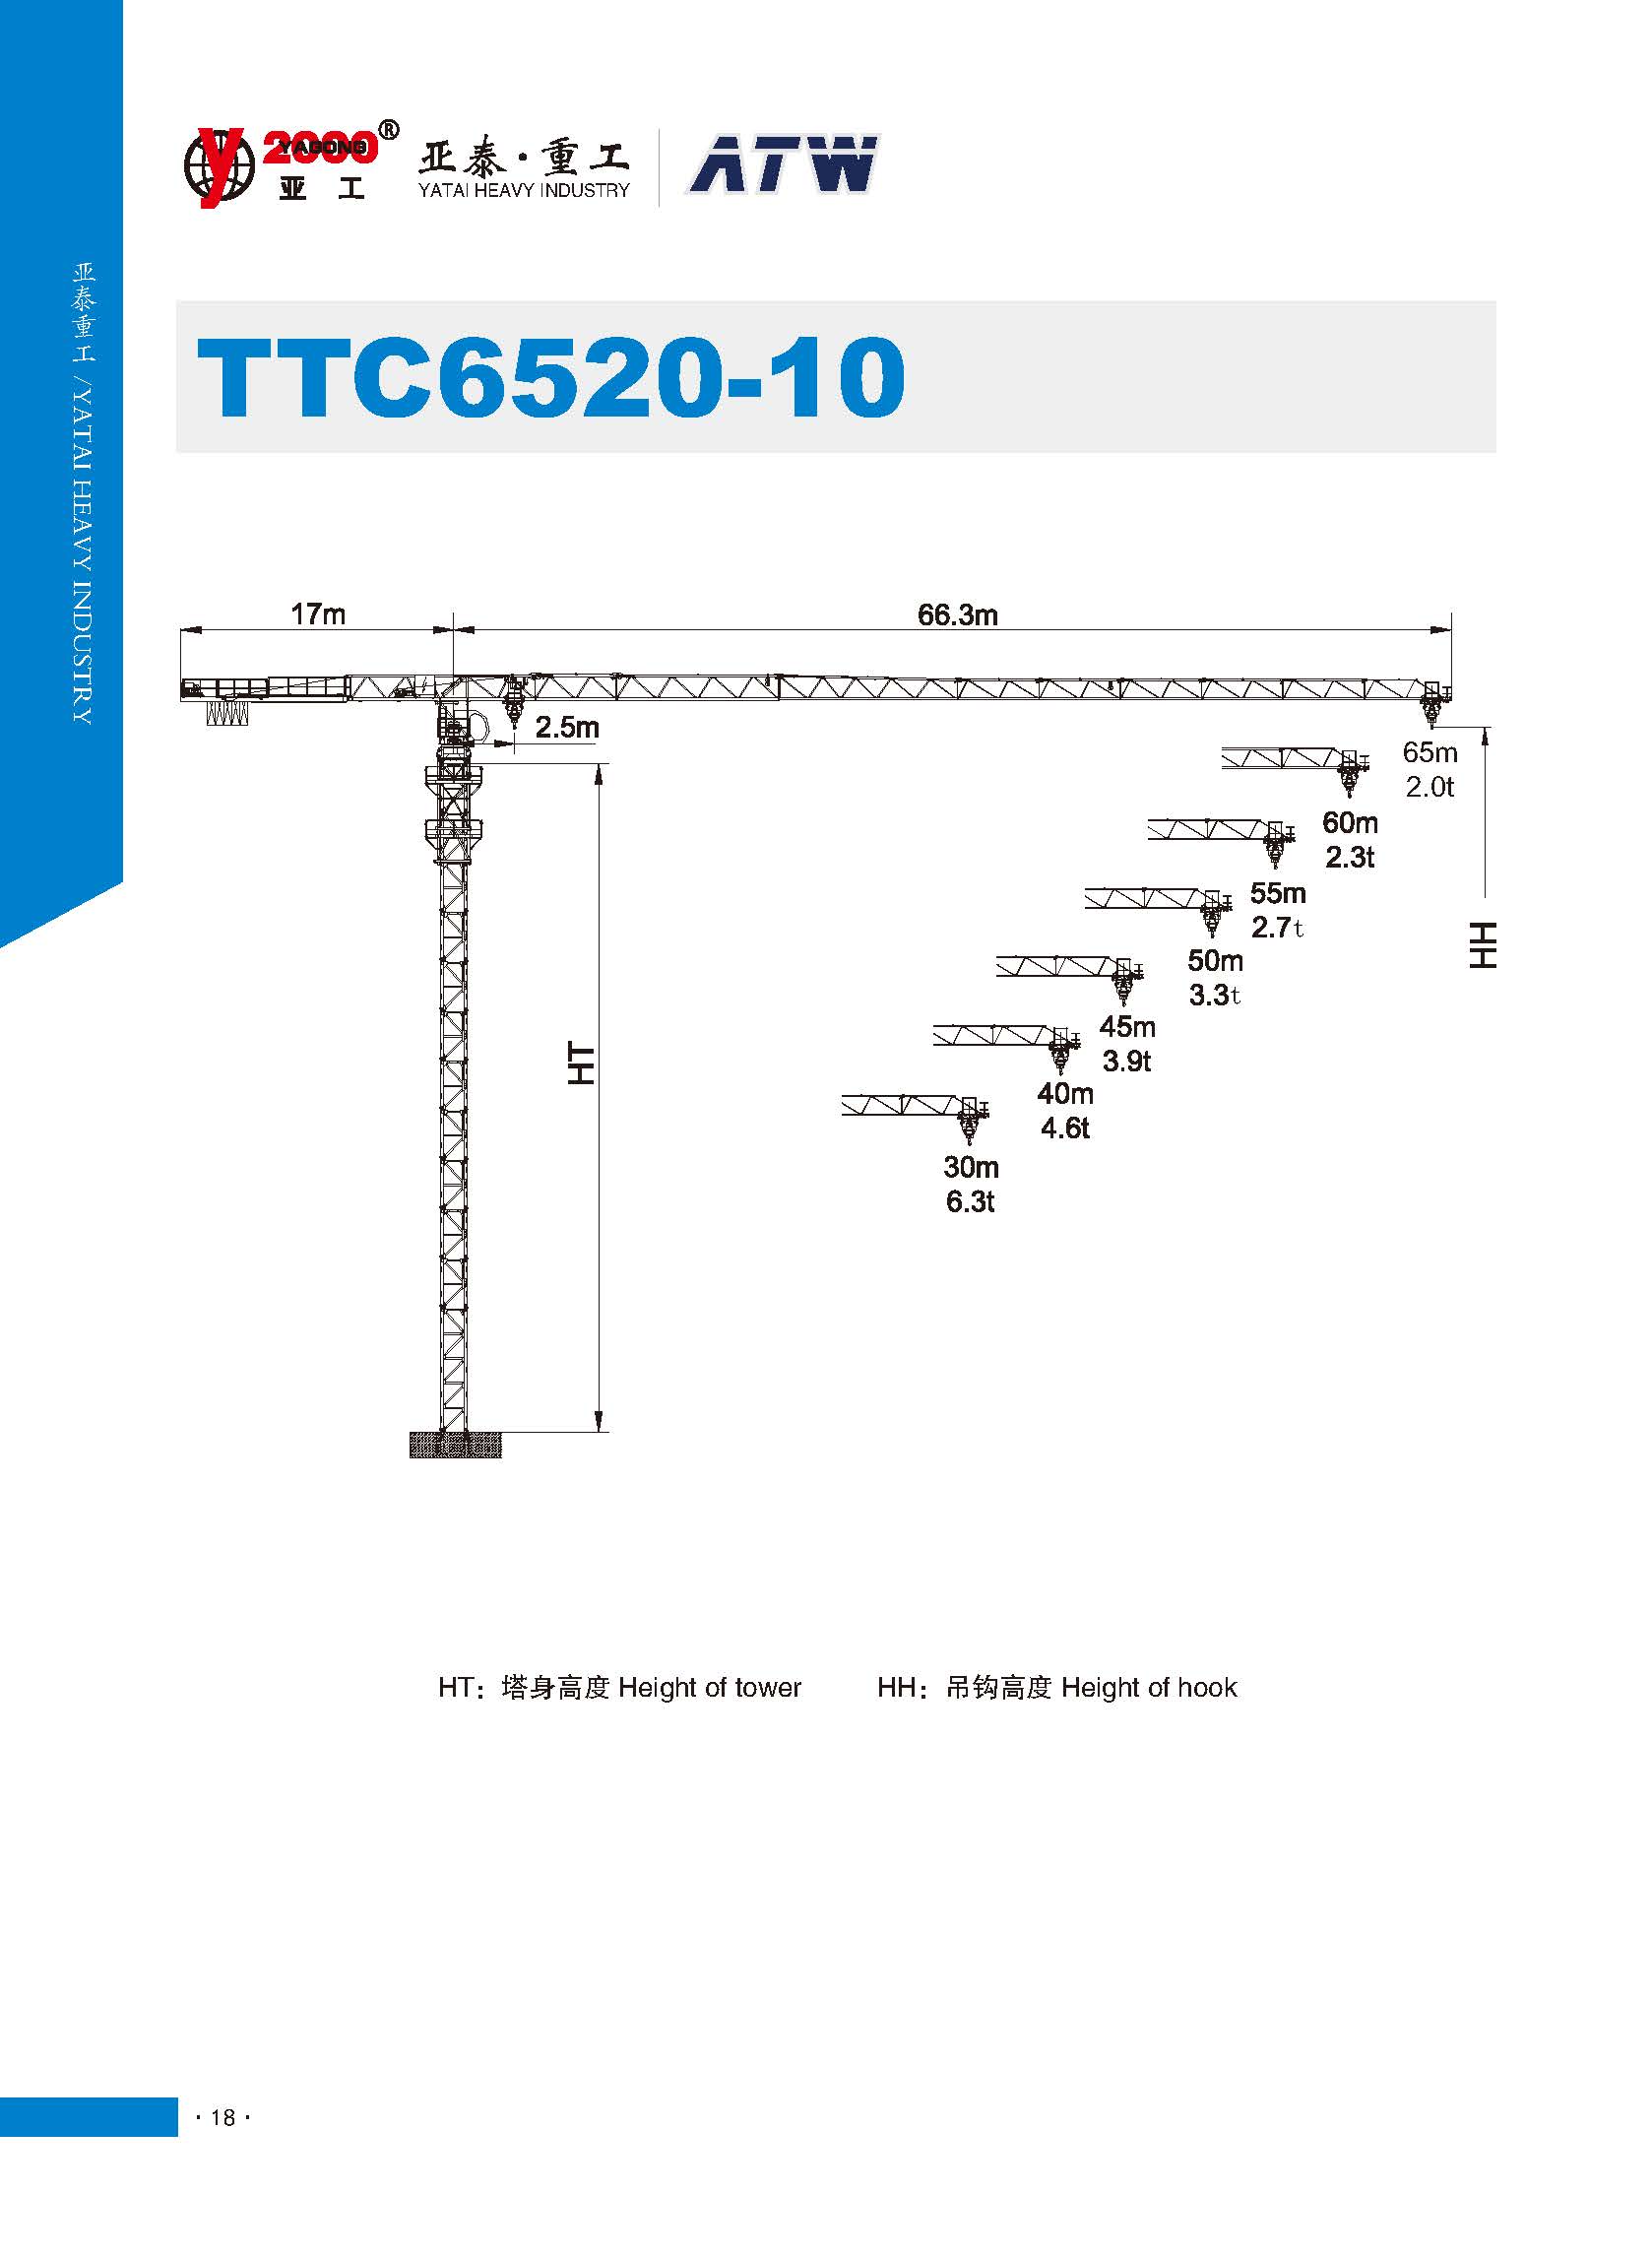 Topless Tower Crane TTC6520-10